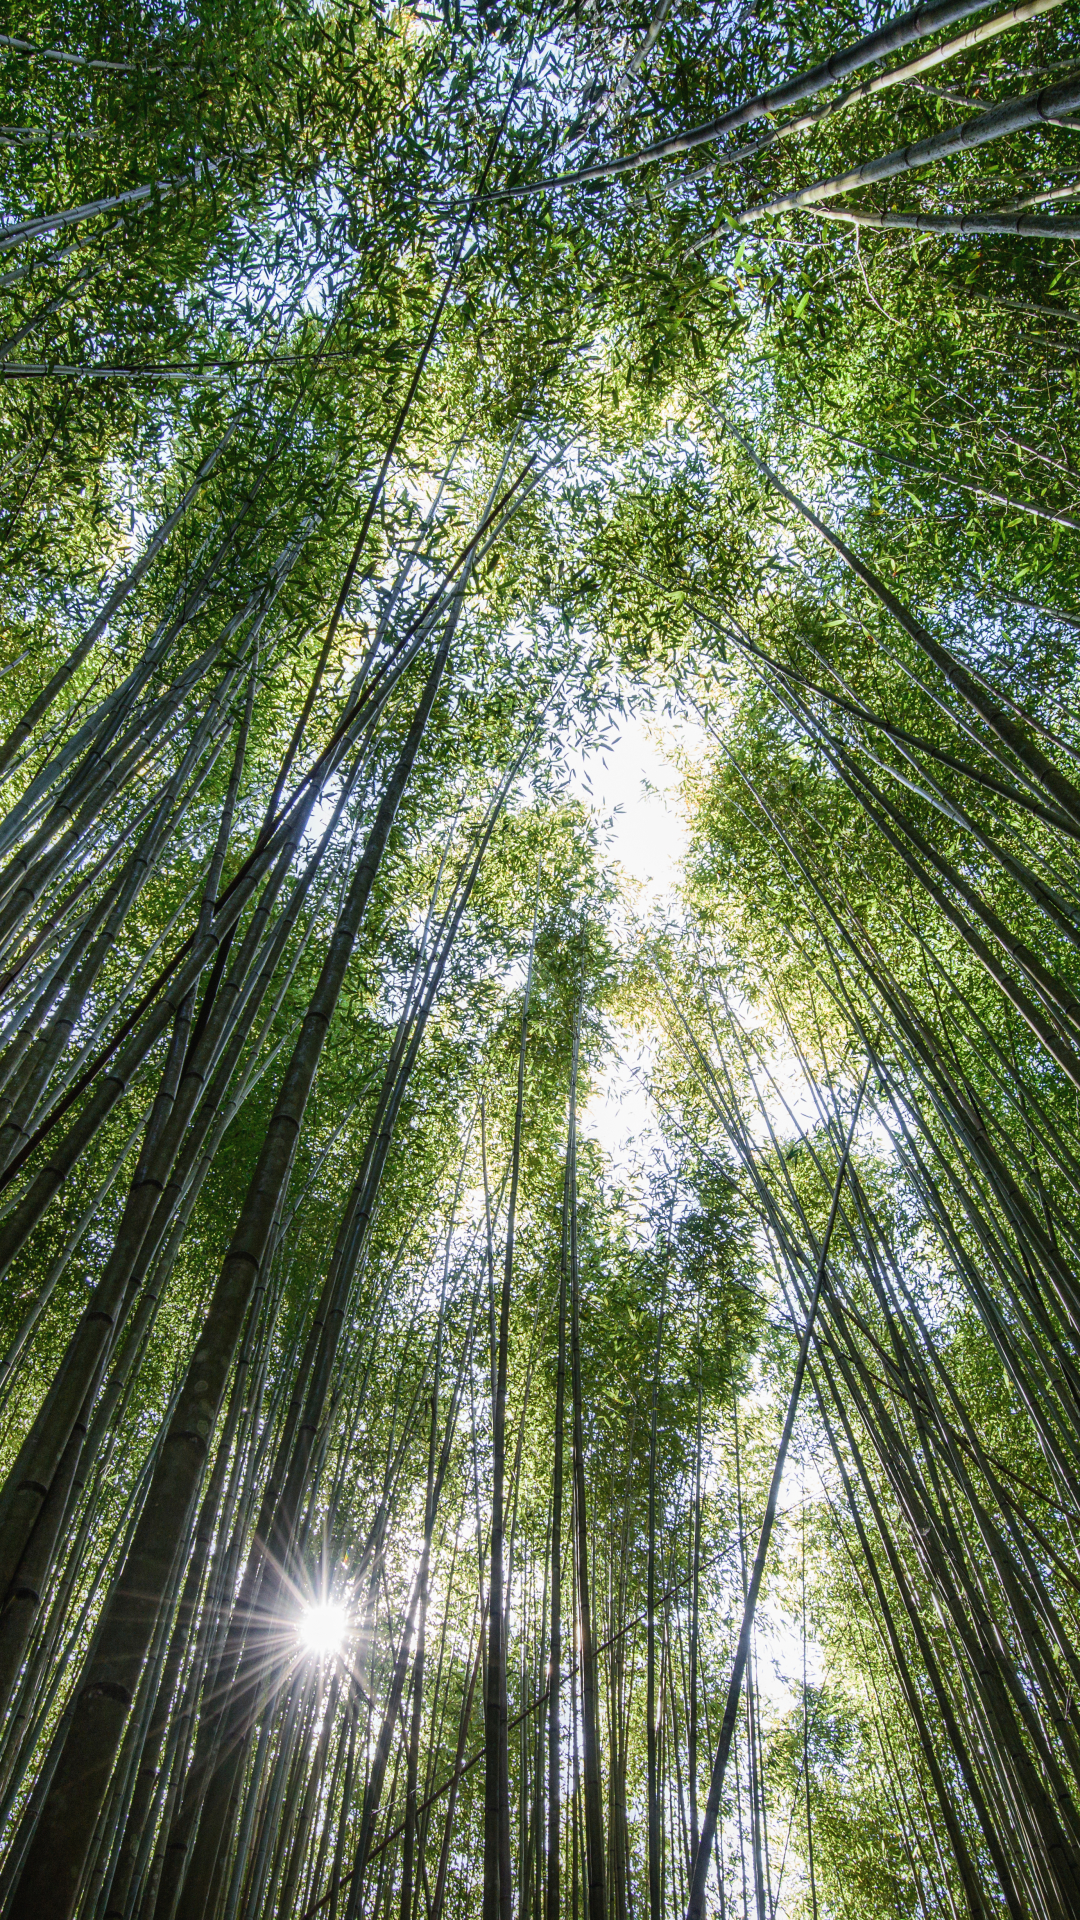 Handy-Wallpaper Natur, Bambus, Erde/natur kostenlos herunterladen.